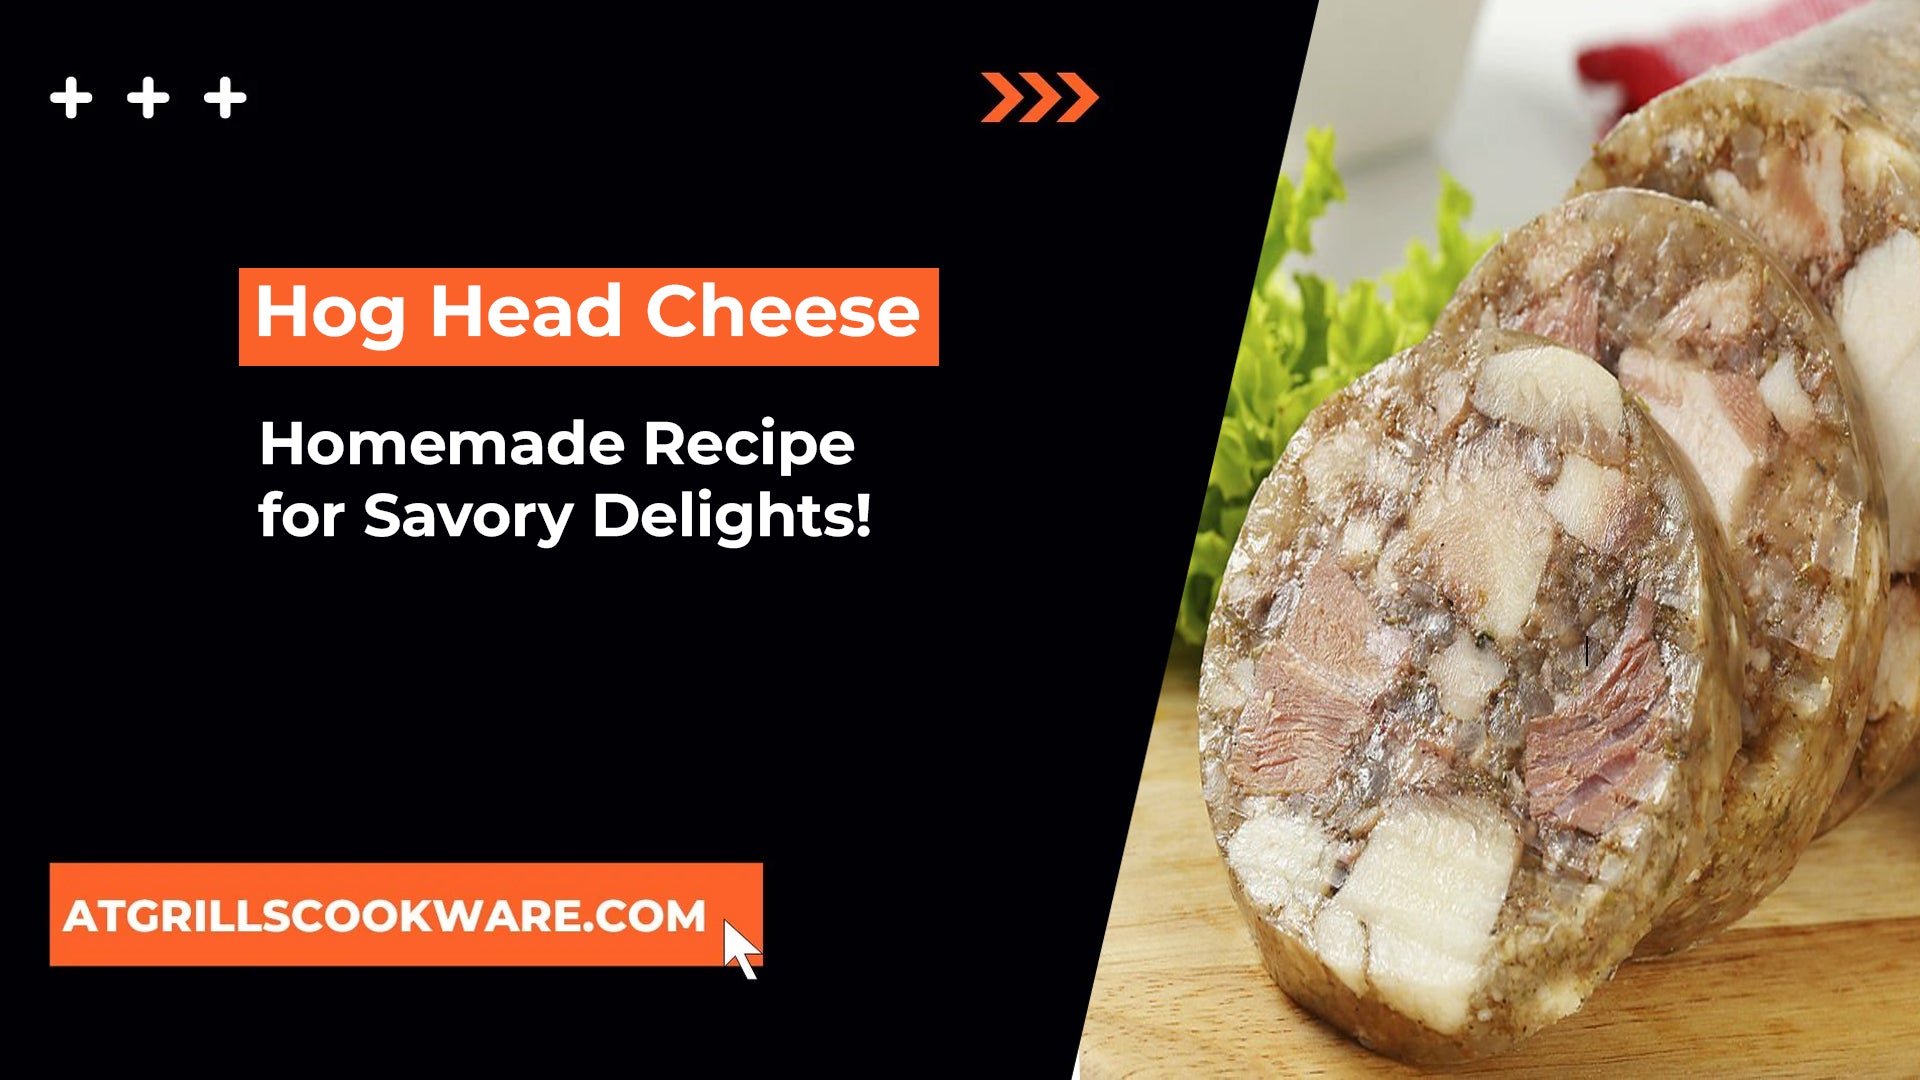 Hog Head Cheese - atgrillscookware